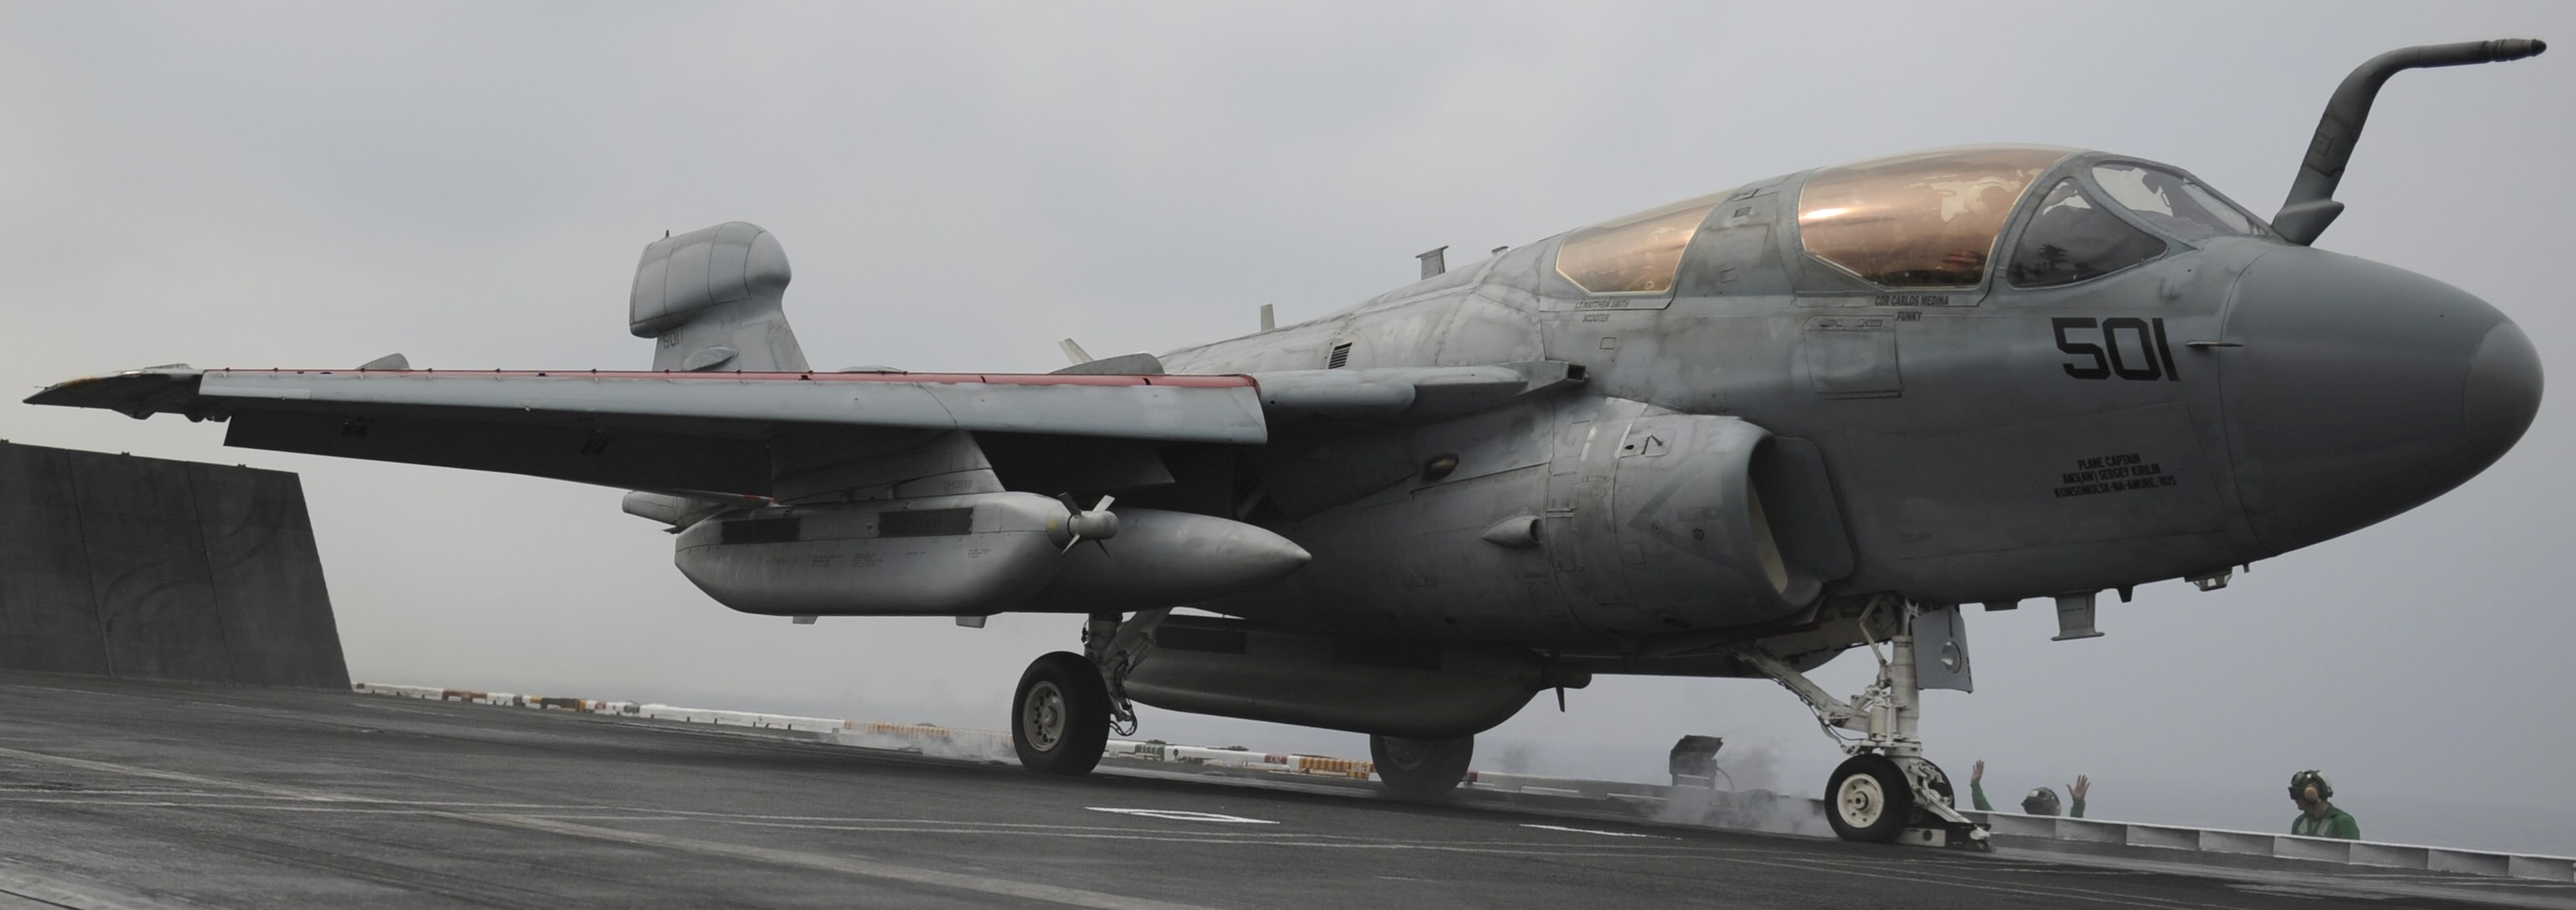 vaq-142 gray wolves electronic attack squadron ea-6b prowler us navy cvw-11 uss nimitz cvn-68 66